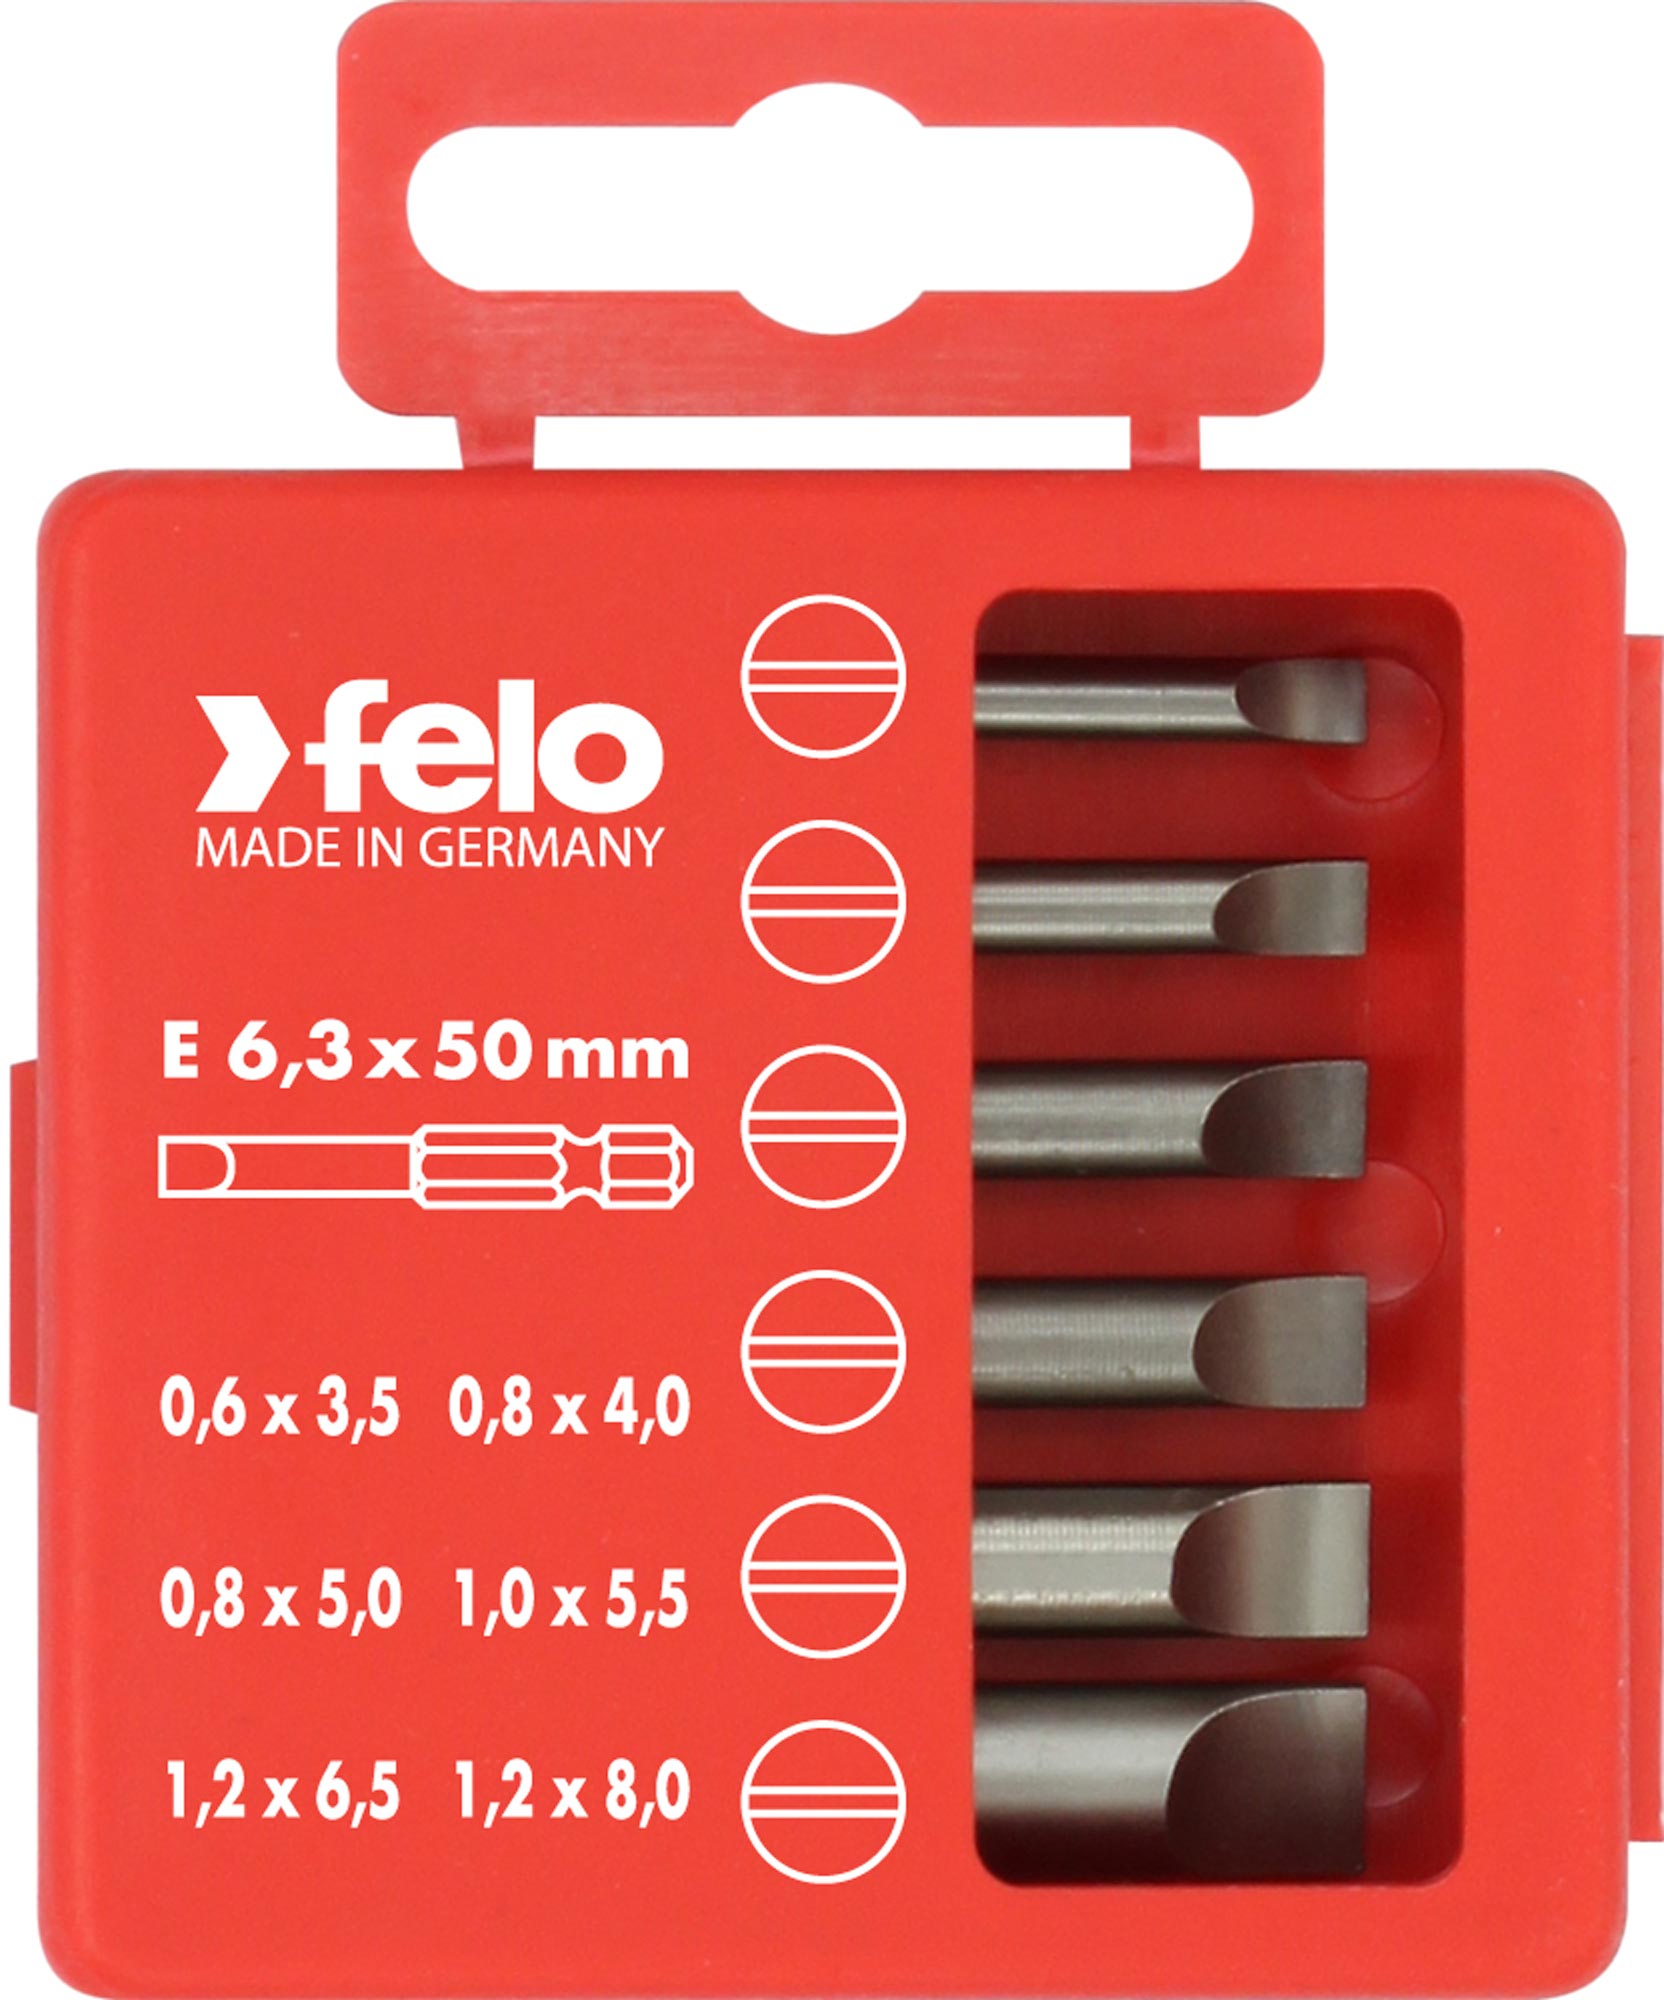 Felo Profi Bit-Box 6-teilig Industrie E 6,3 x 50 mm Schlitz SL Bit Set - SL 3,0 | SL 3,5 | SL 4,0 | SL 5,5 | SL 6,5 | SL 8,0 (FL-03091516) Bild-01